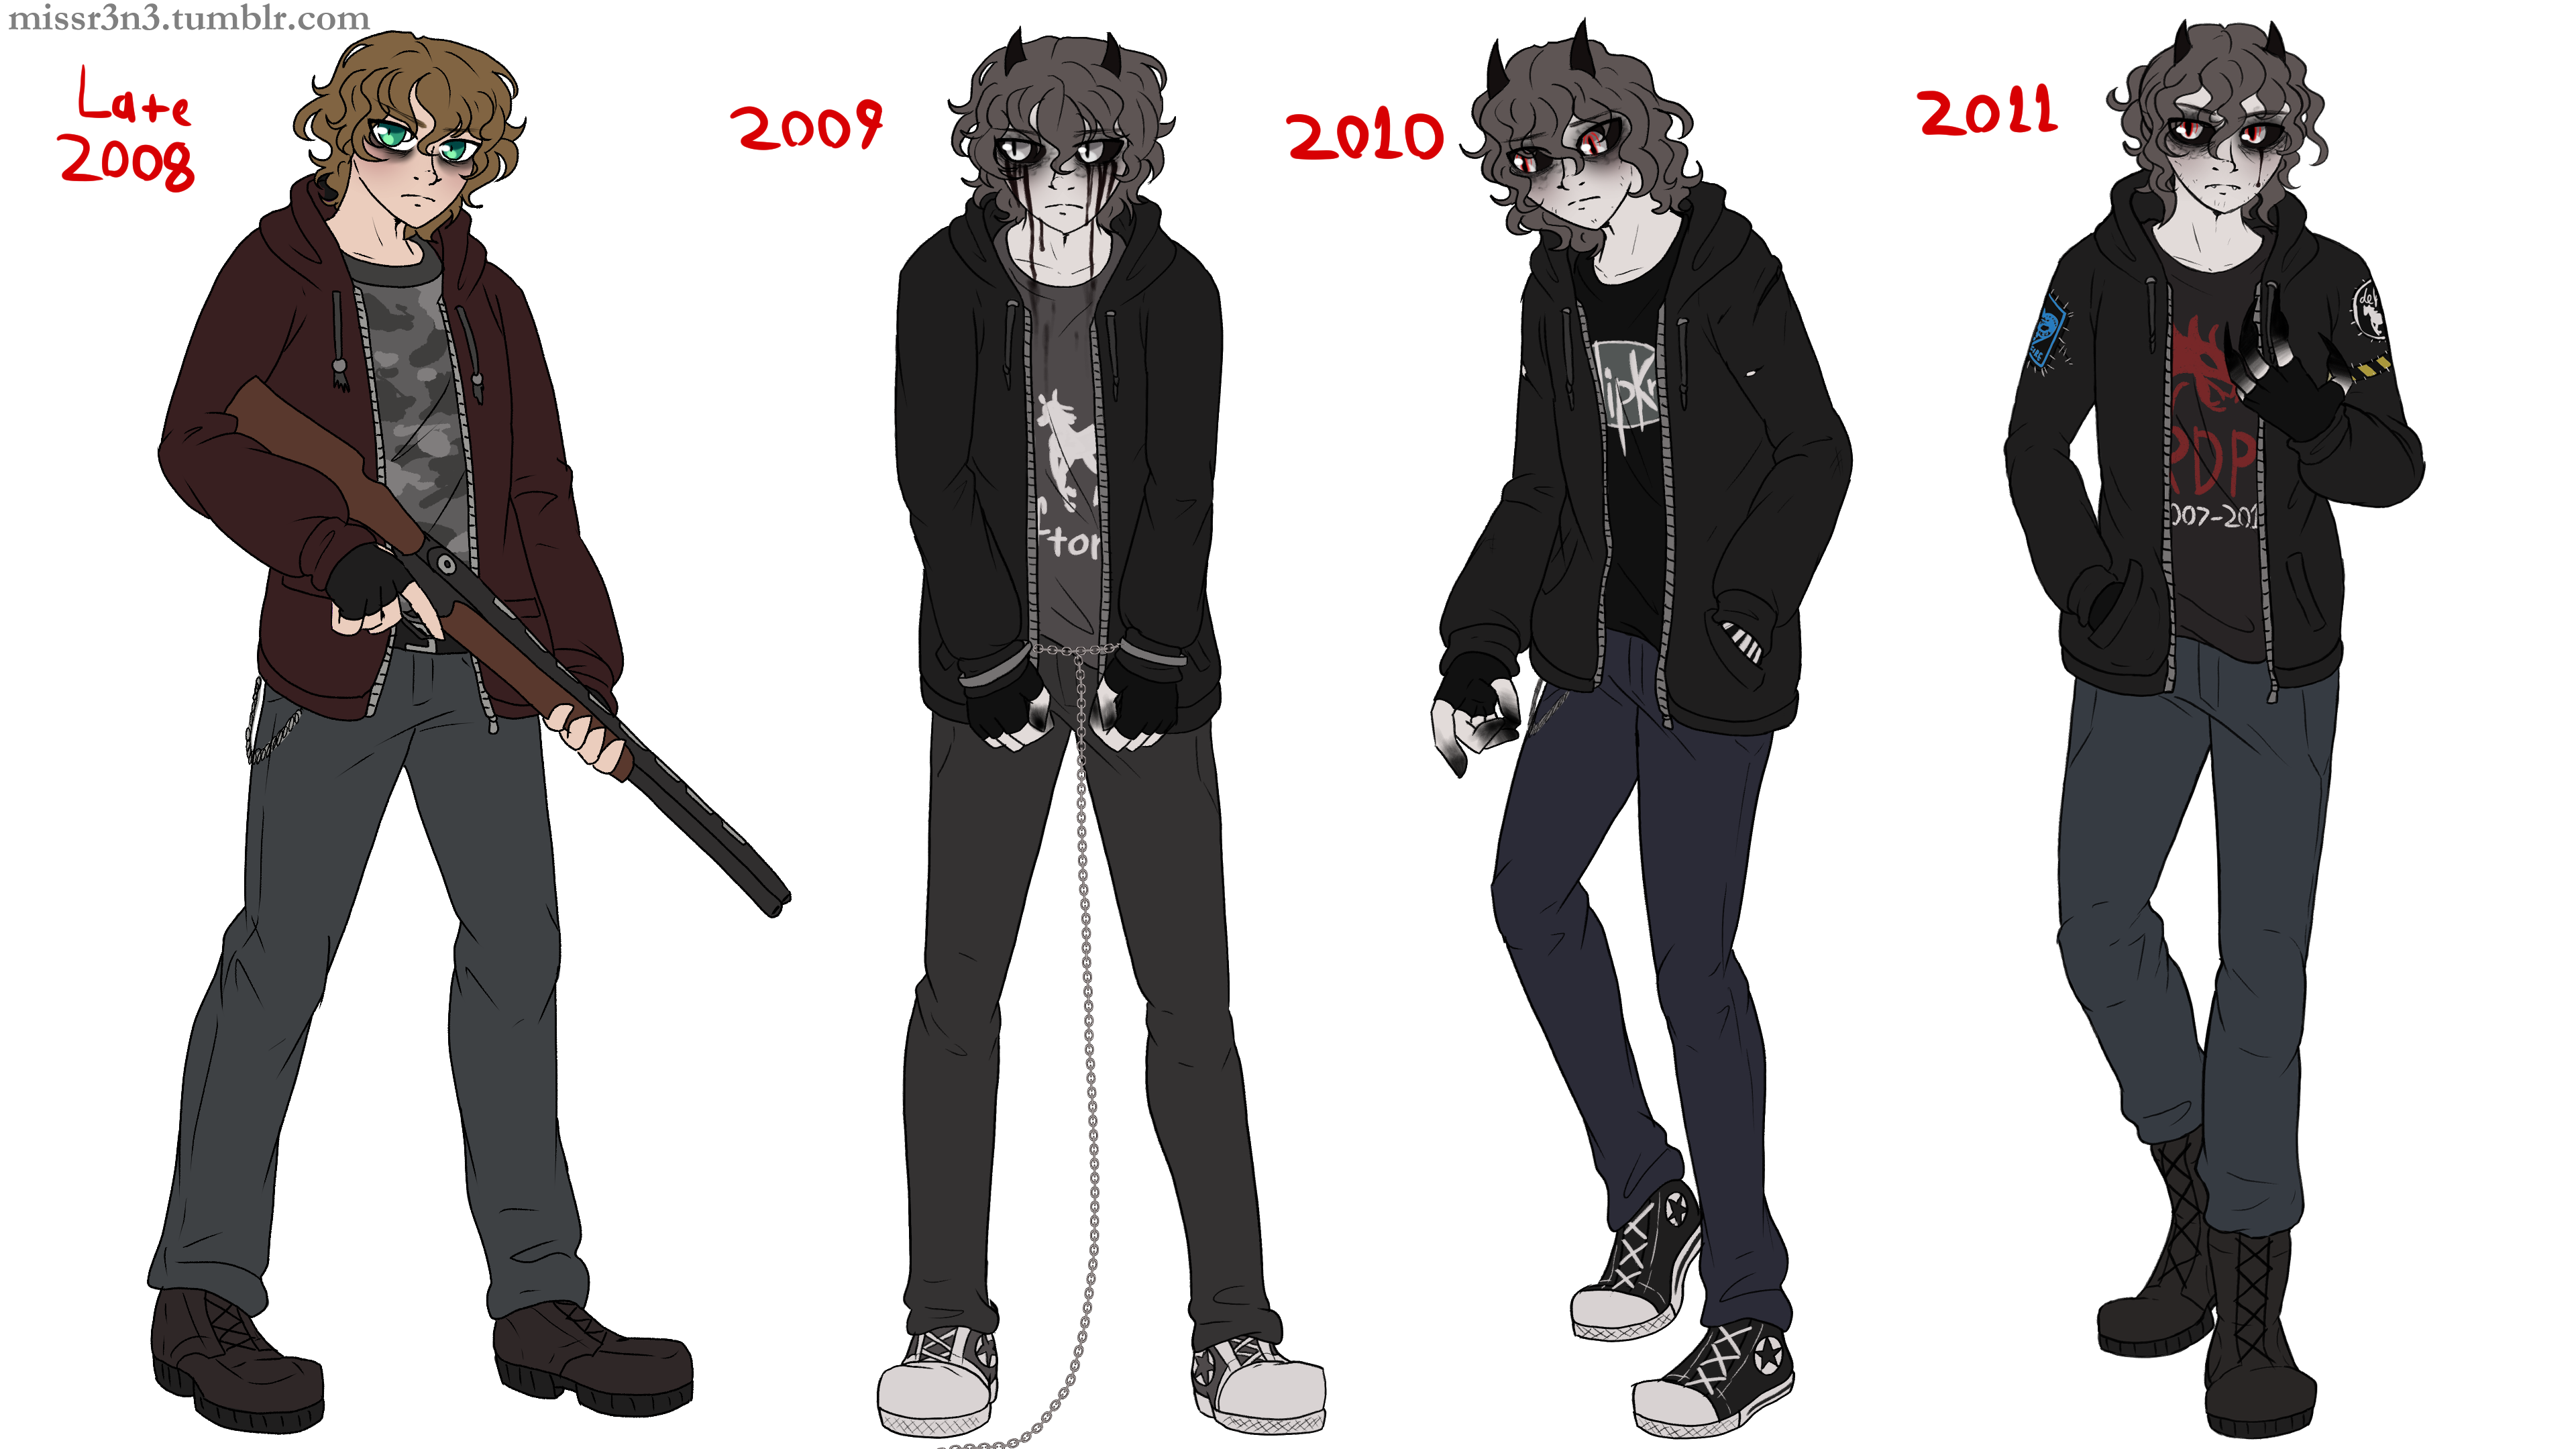 joshua atkin's 2008, 2009, 2010, and 2011 designs